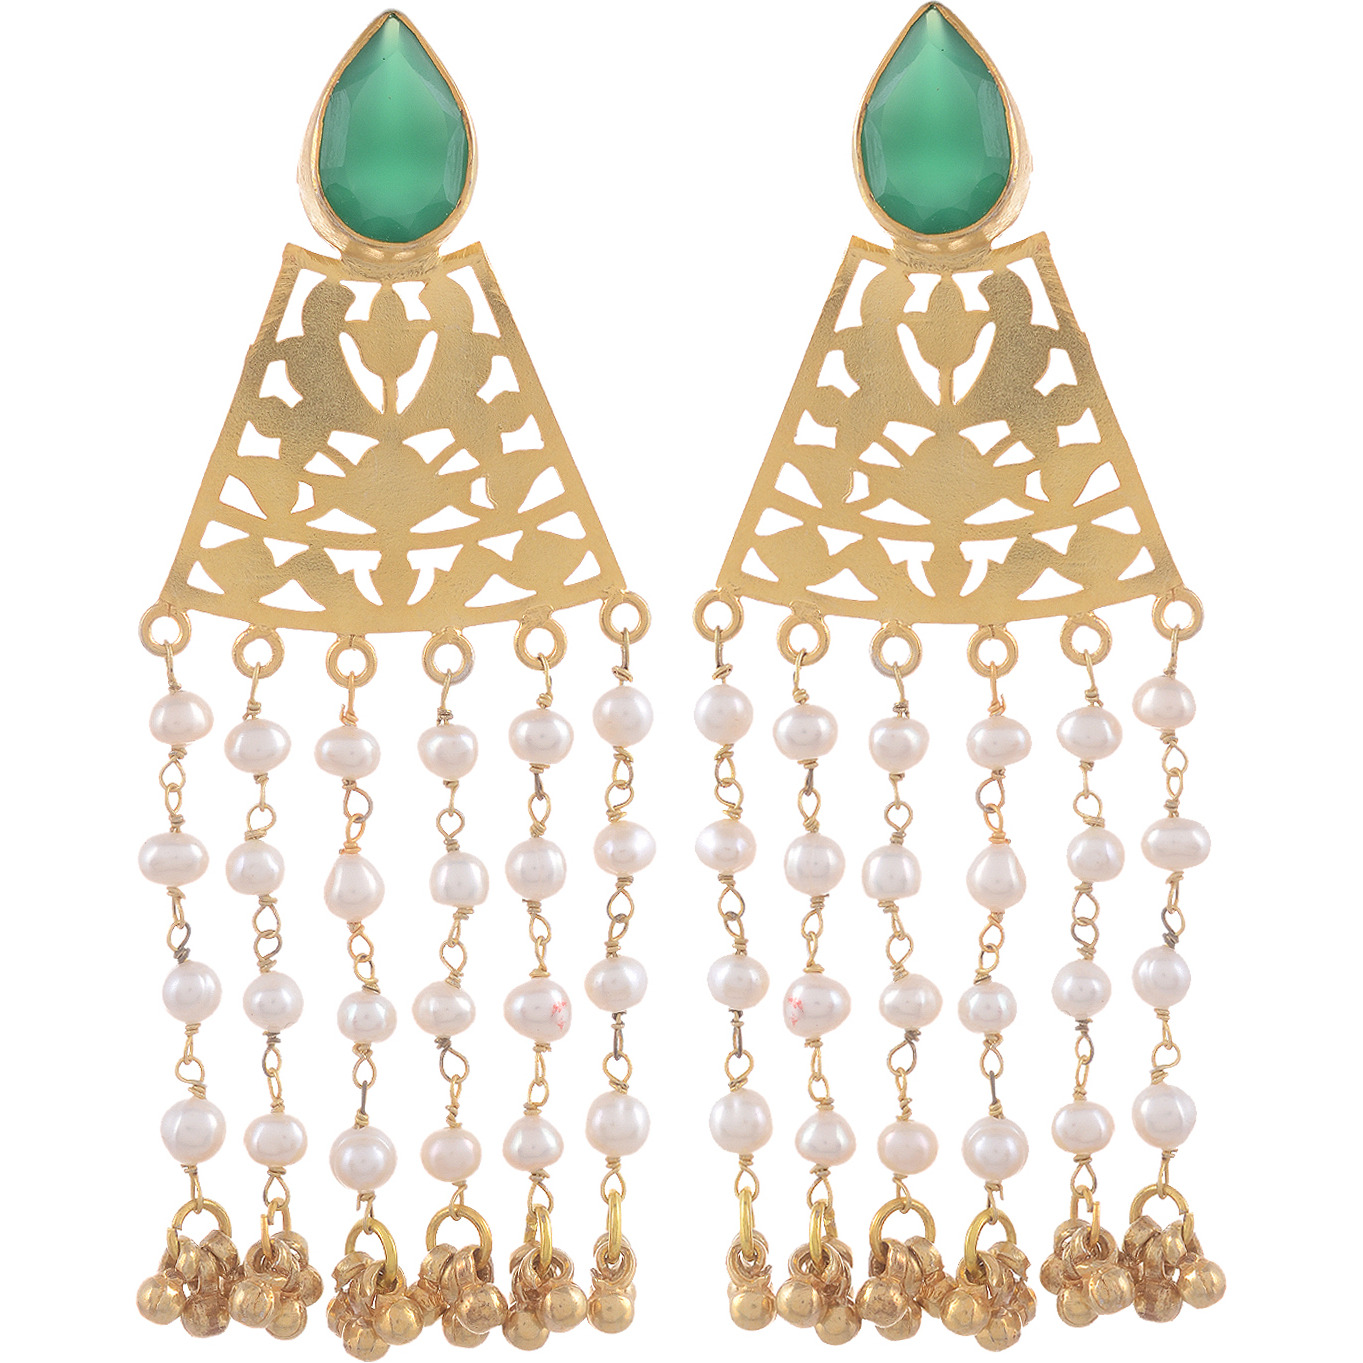 Gold Plated, Green Oynx, Fresh Water Pearls Beautiful Drop Earrings By Silvermerc Designs